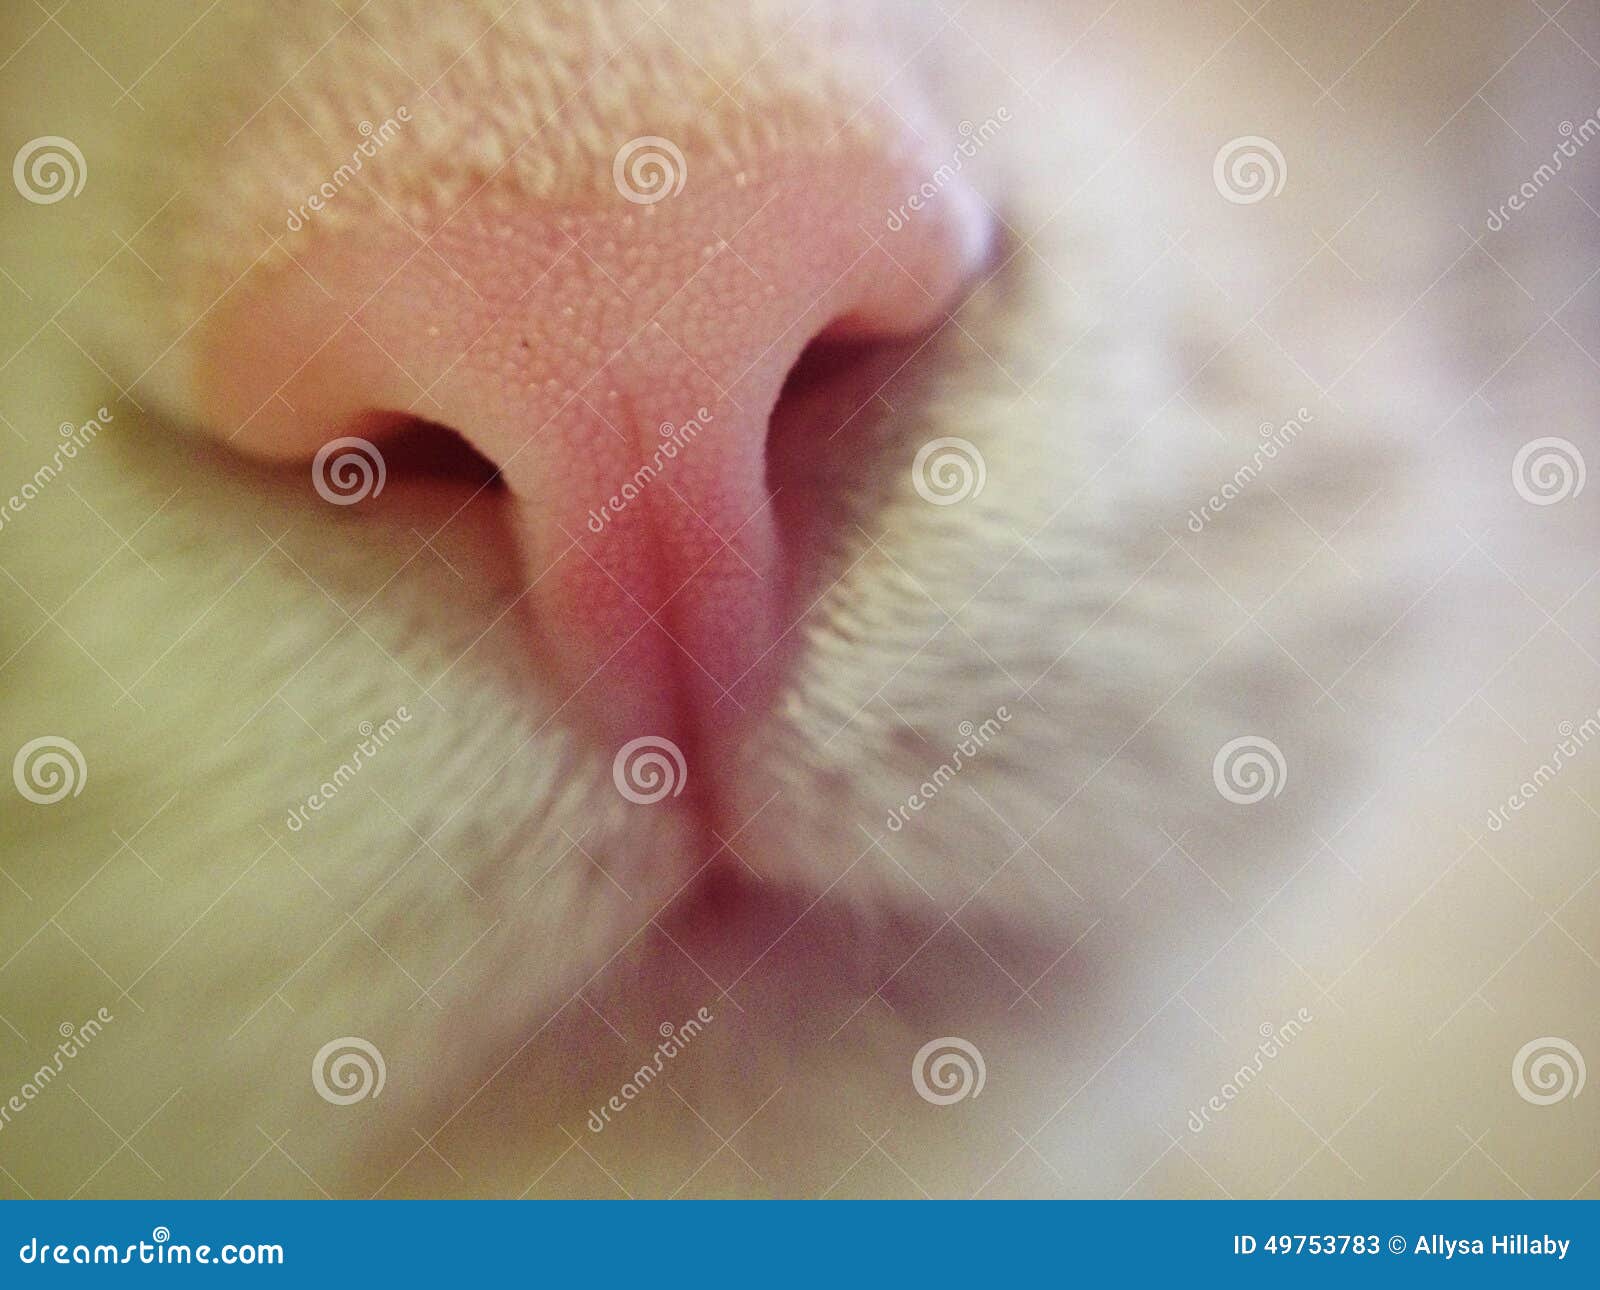 Кошки сопли из носа. Нос кота. Розовый кошачий нос.